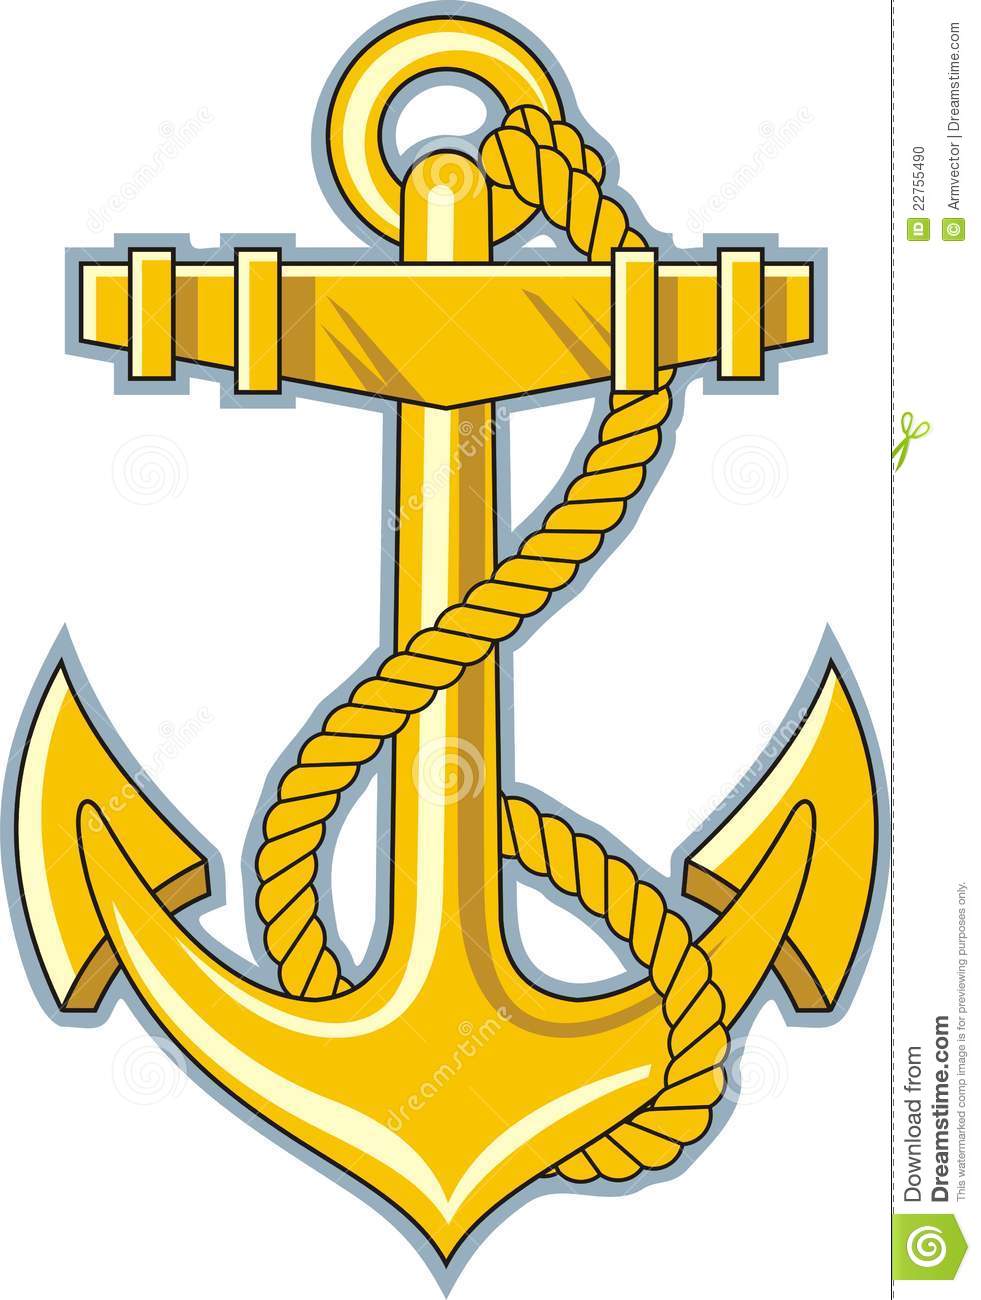 Us Navy Insignia Clip Art Fre